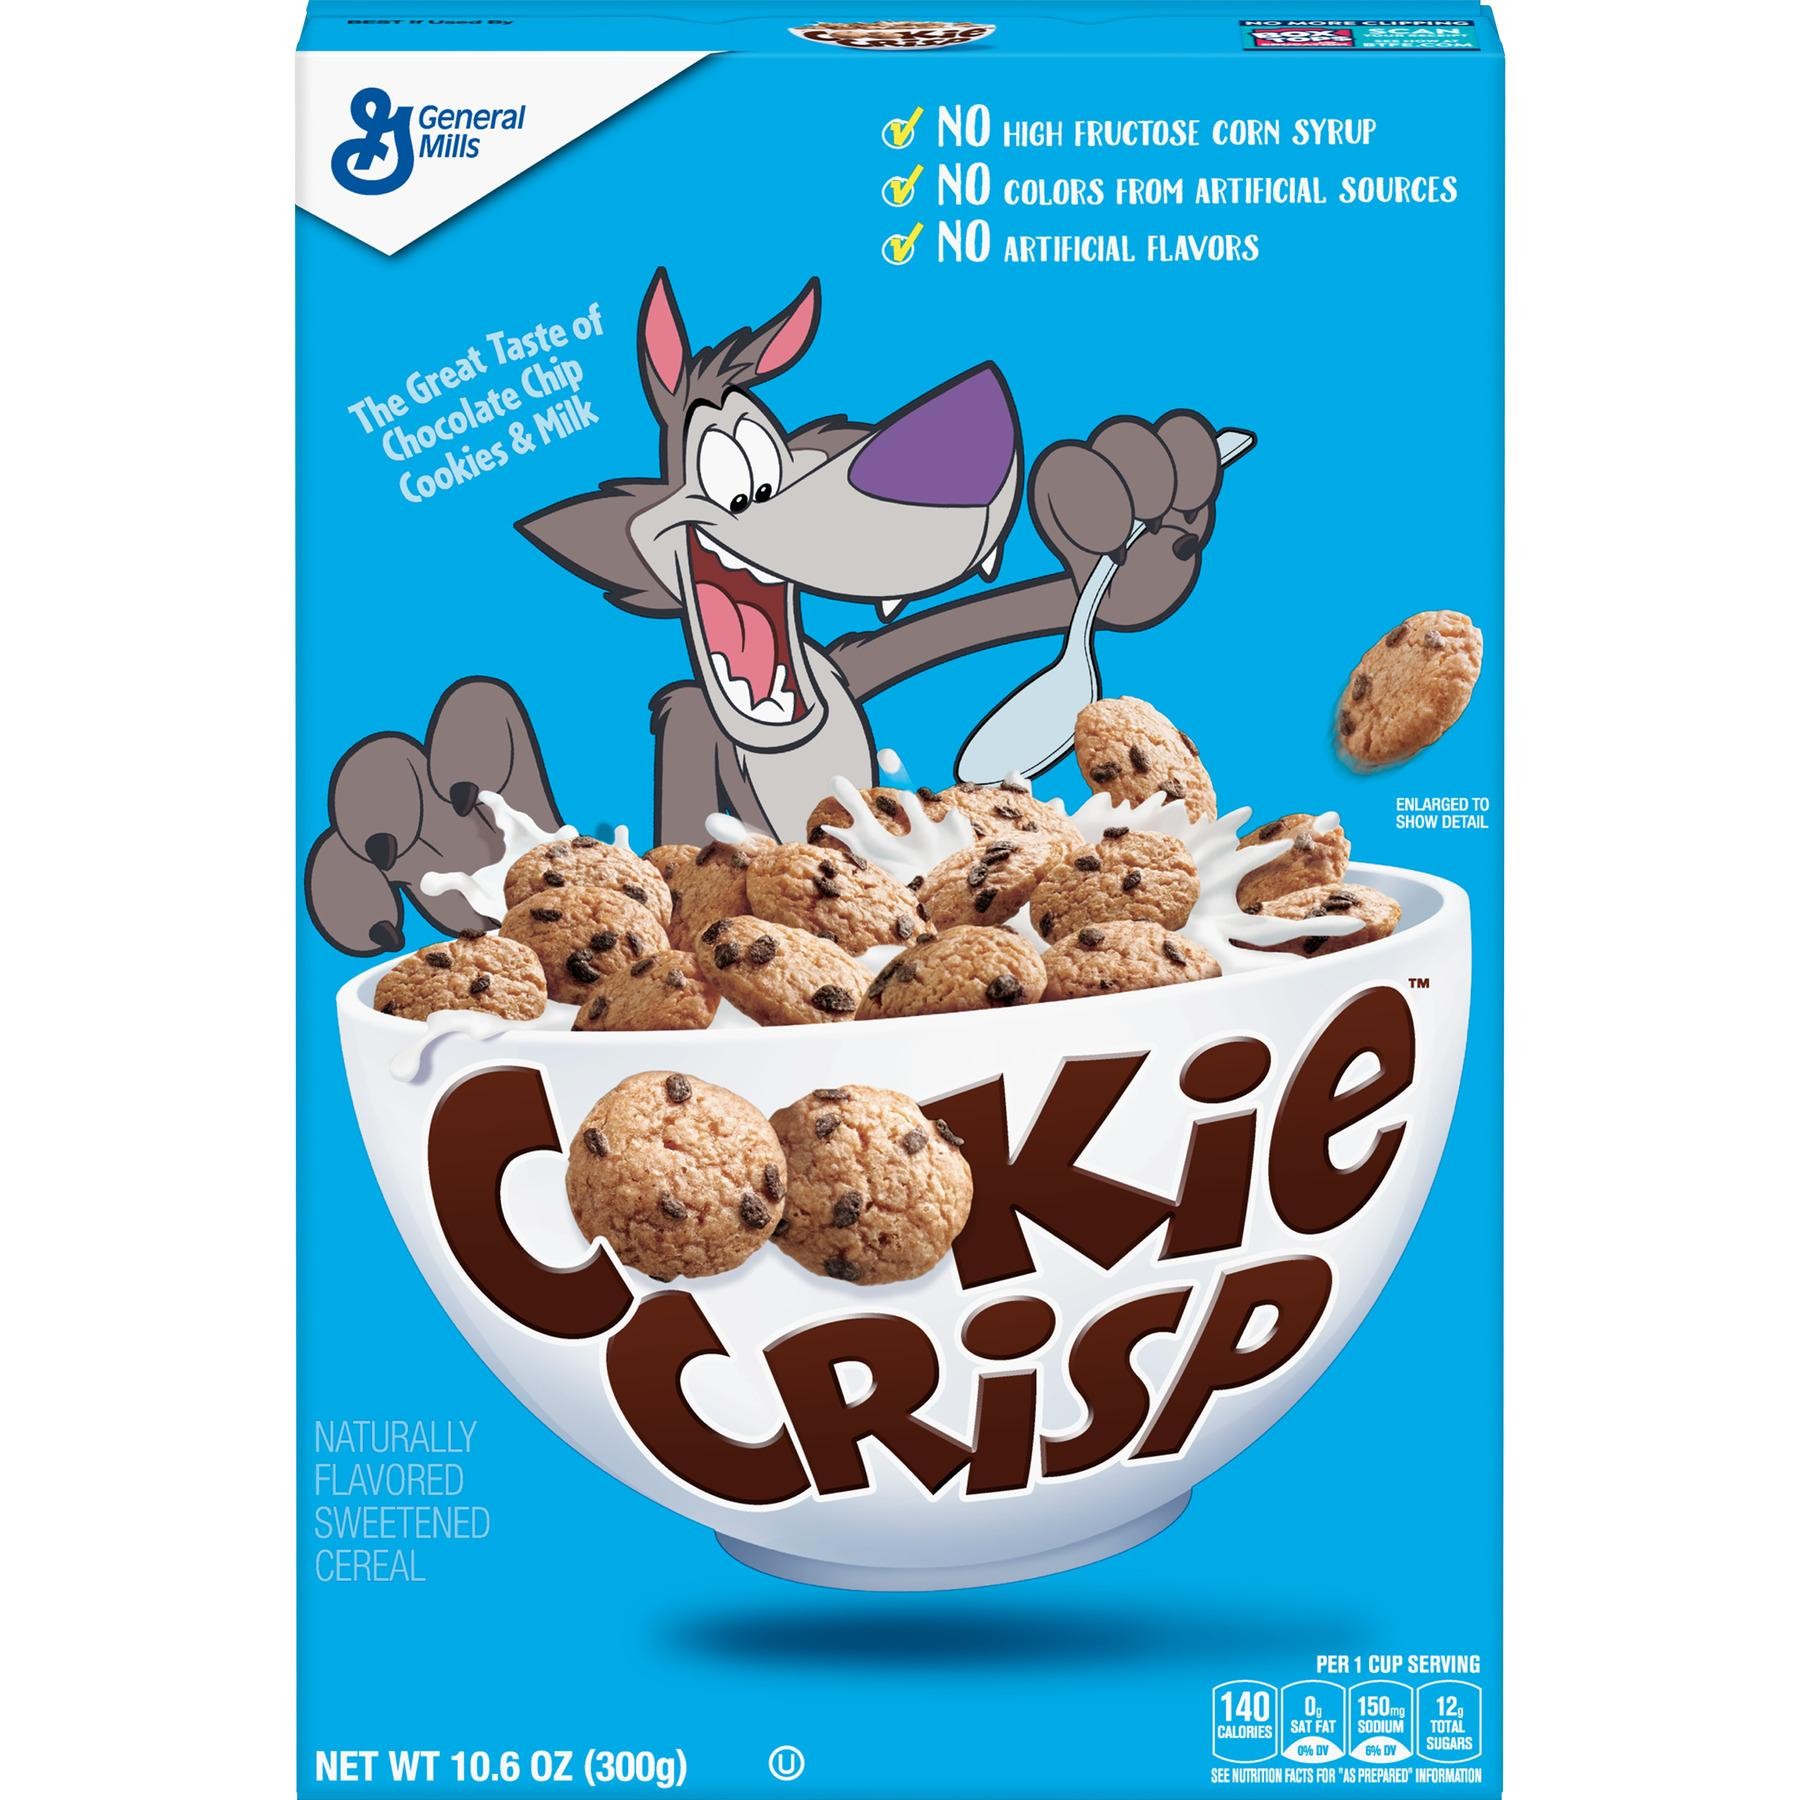 Nestle Sensations Froot Loops Cereal Flavored Milk Froot Loops